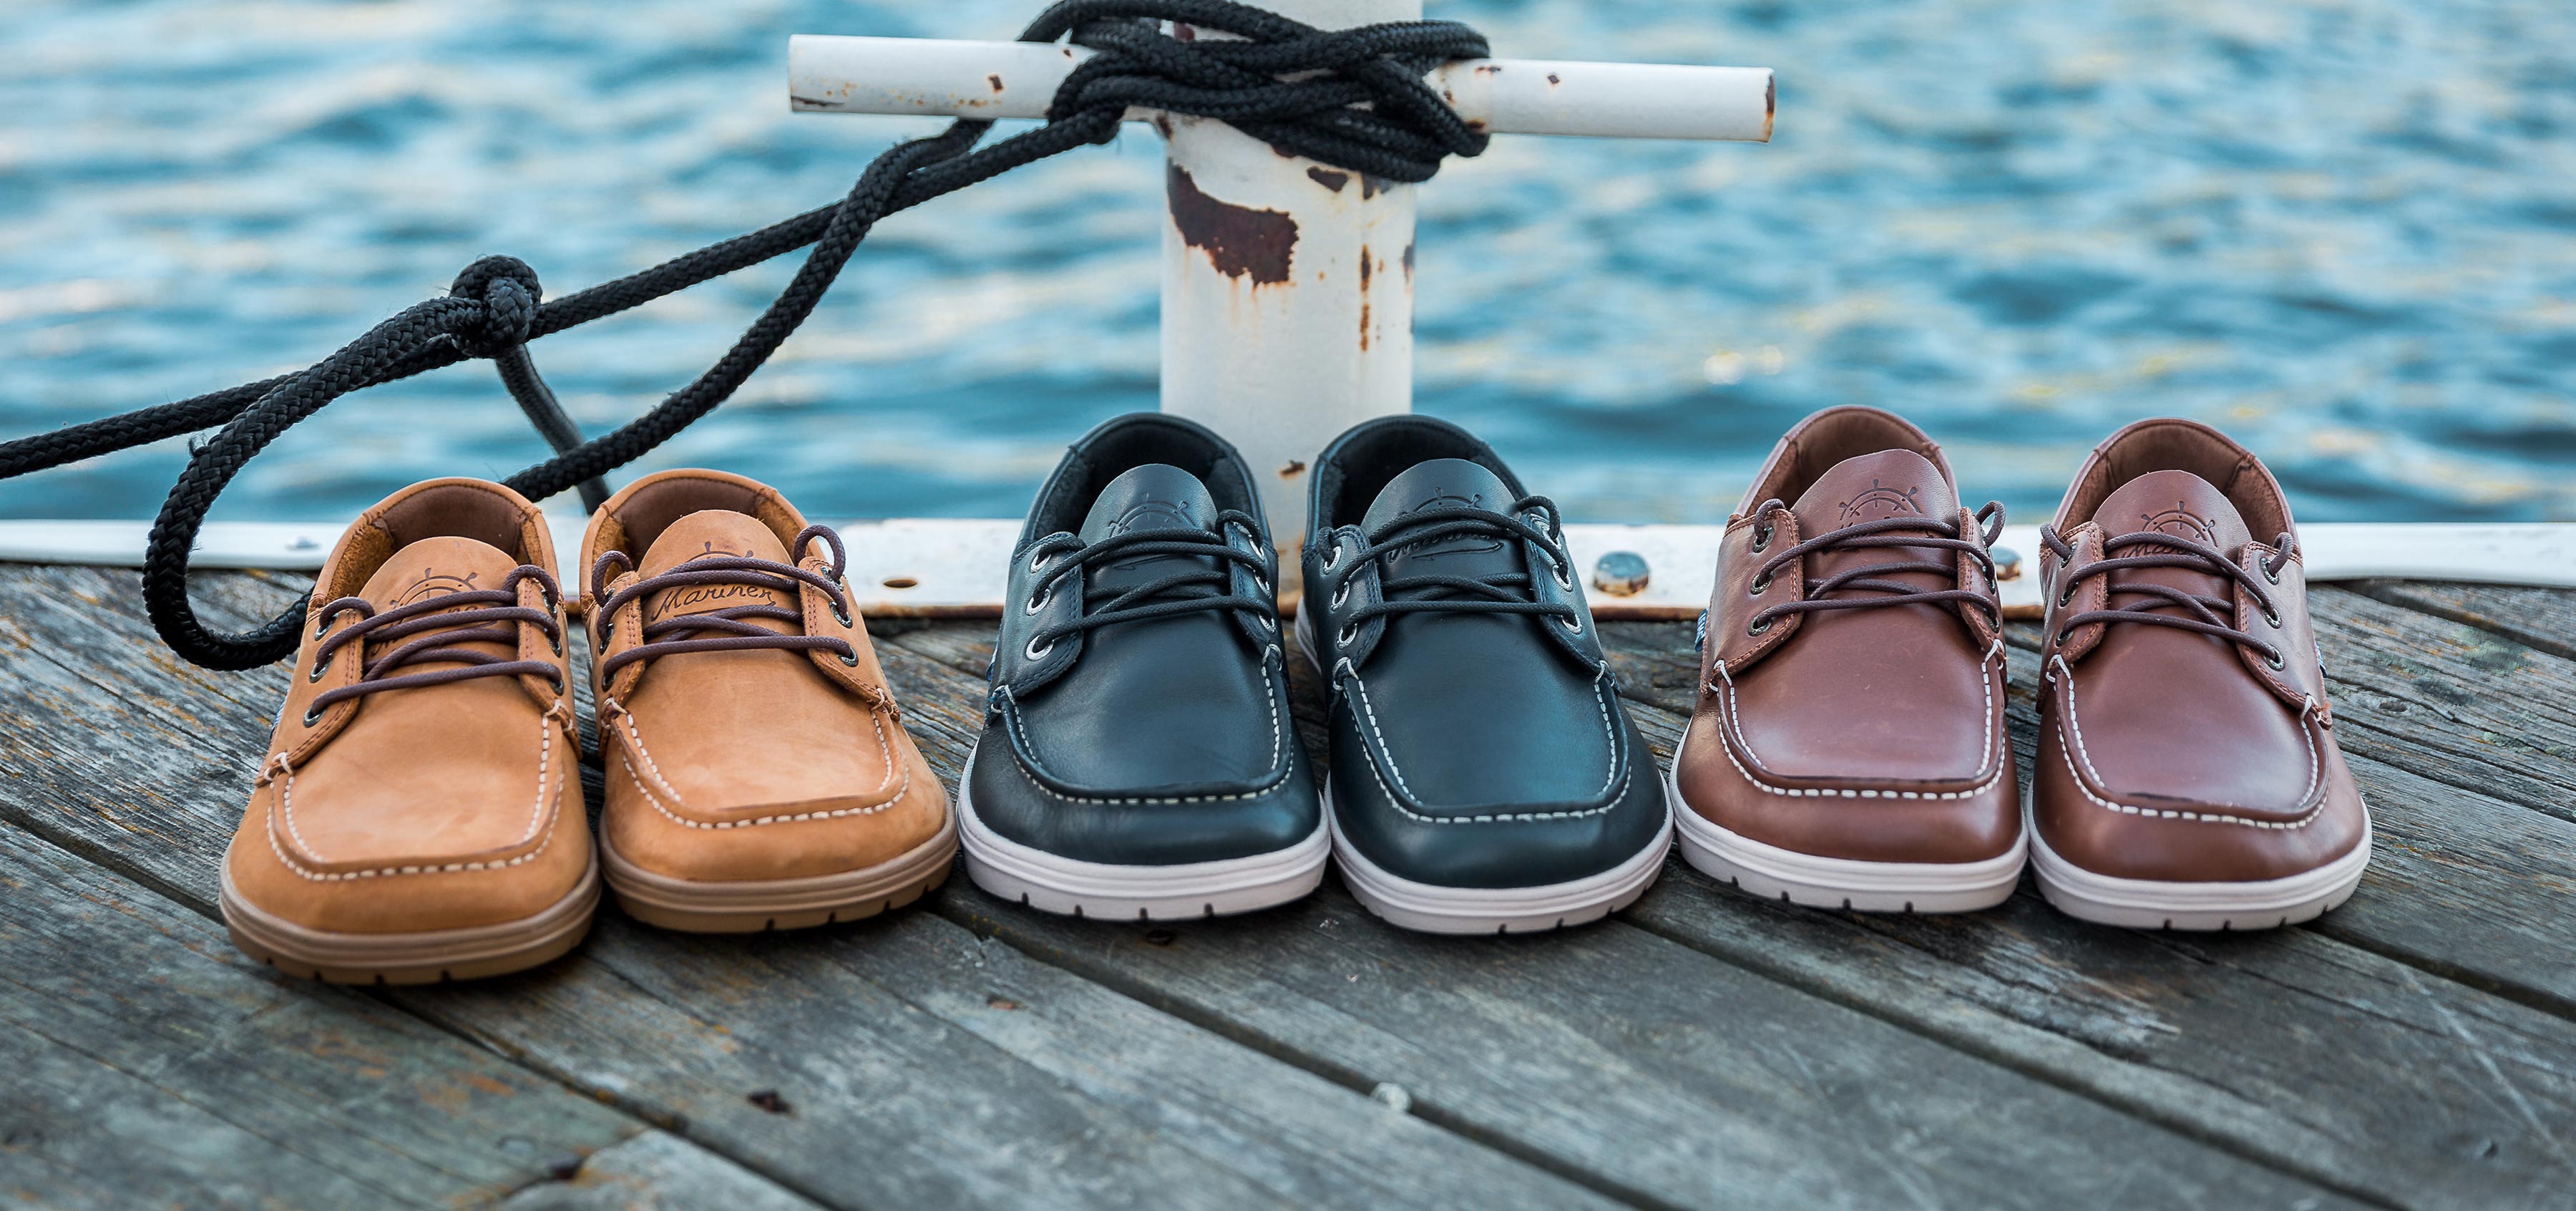 Ensuring Proper Fit and Comfort in Nautical Footwear